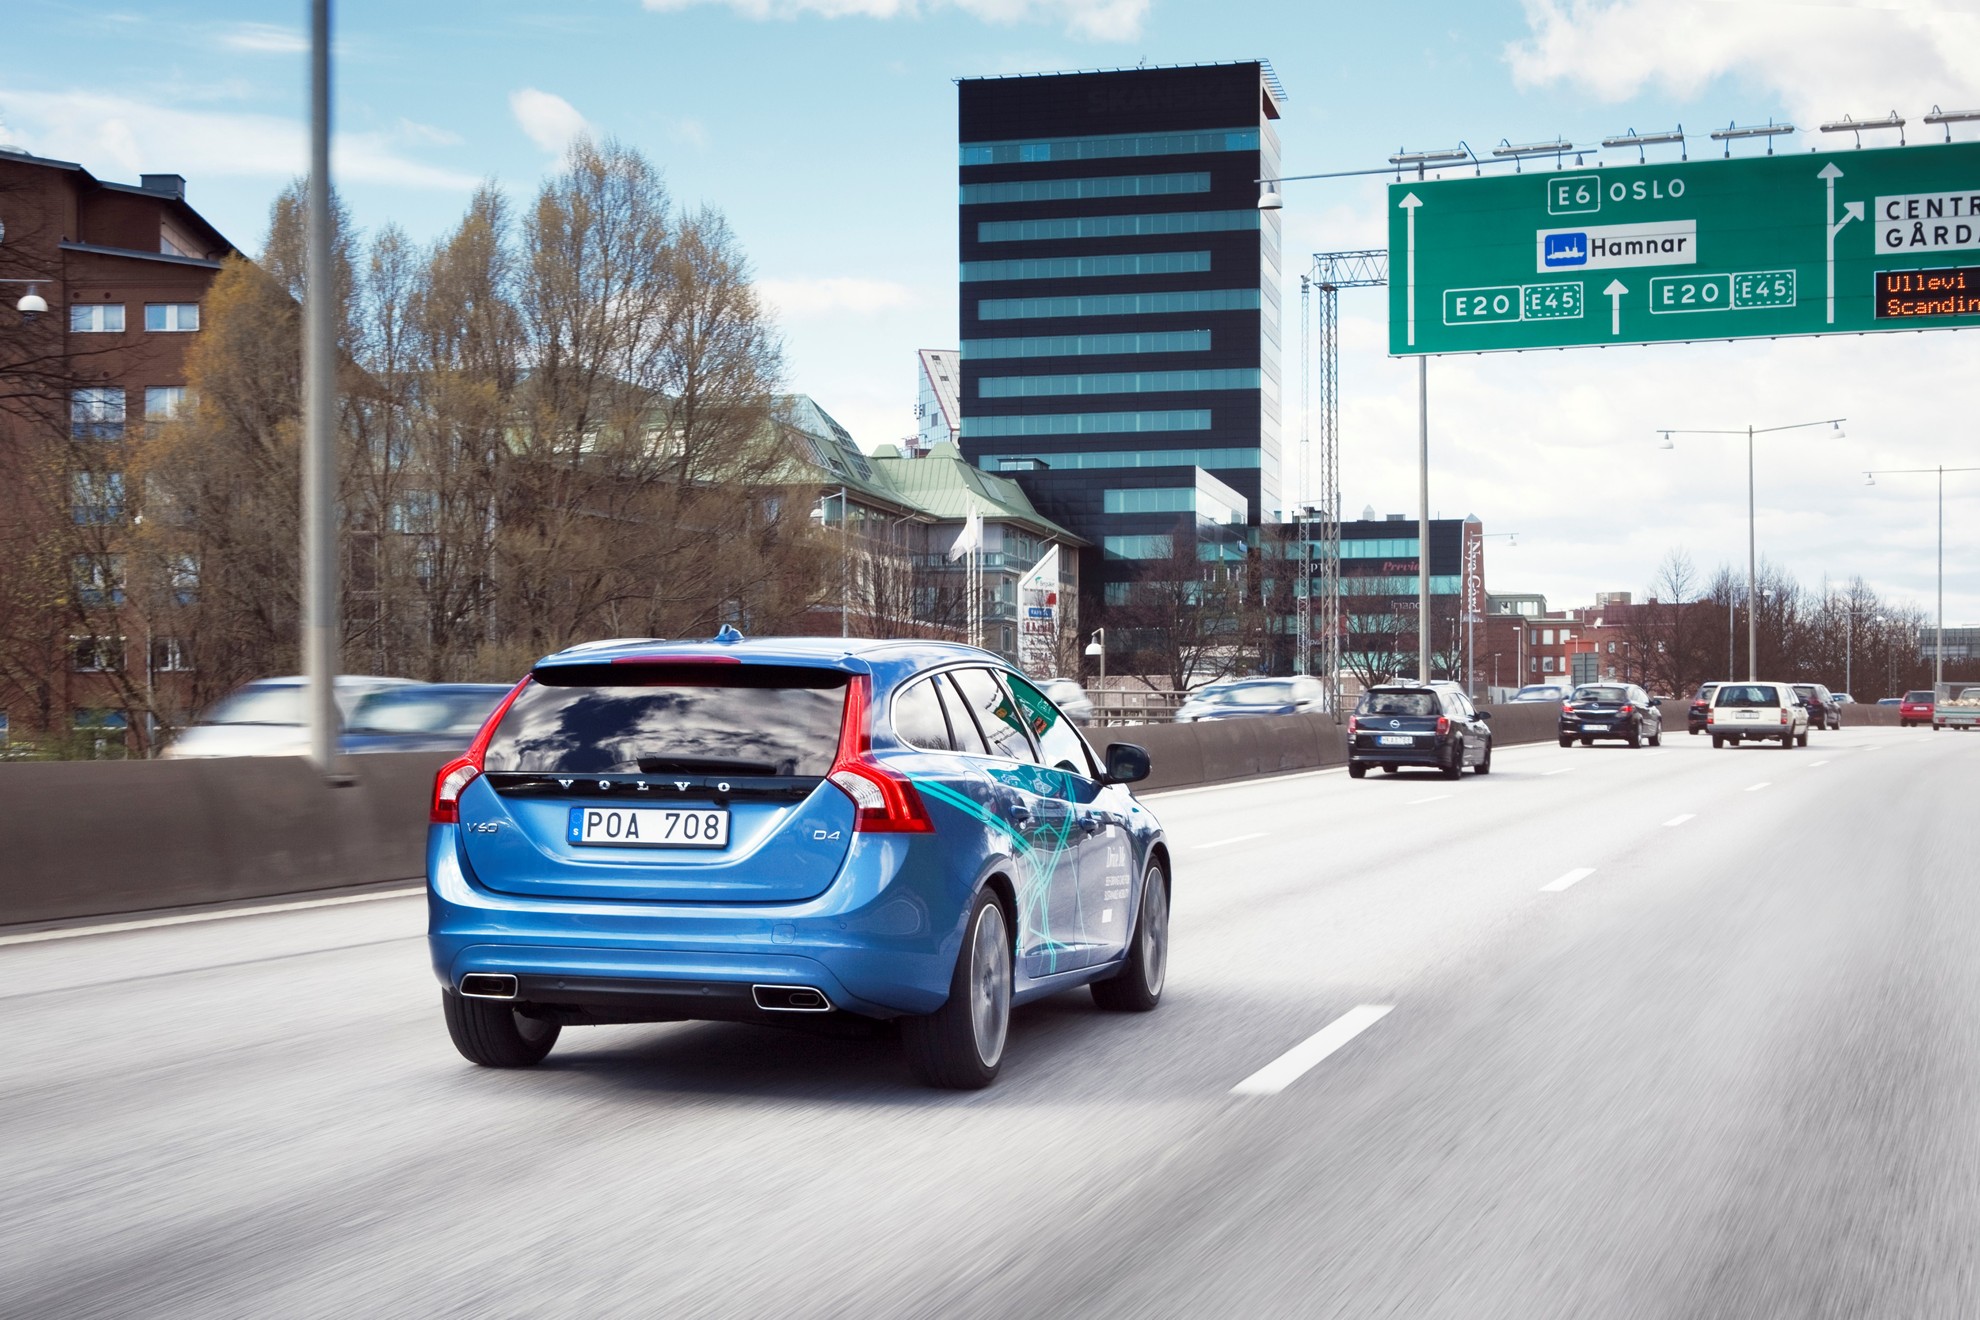 Volvo Autonomous Driving Cars Tested on Public Roads